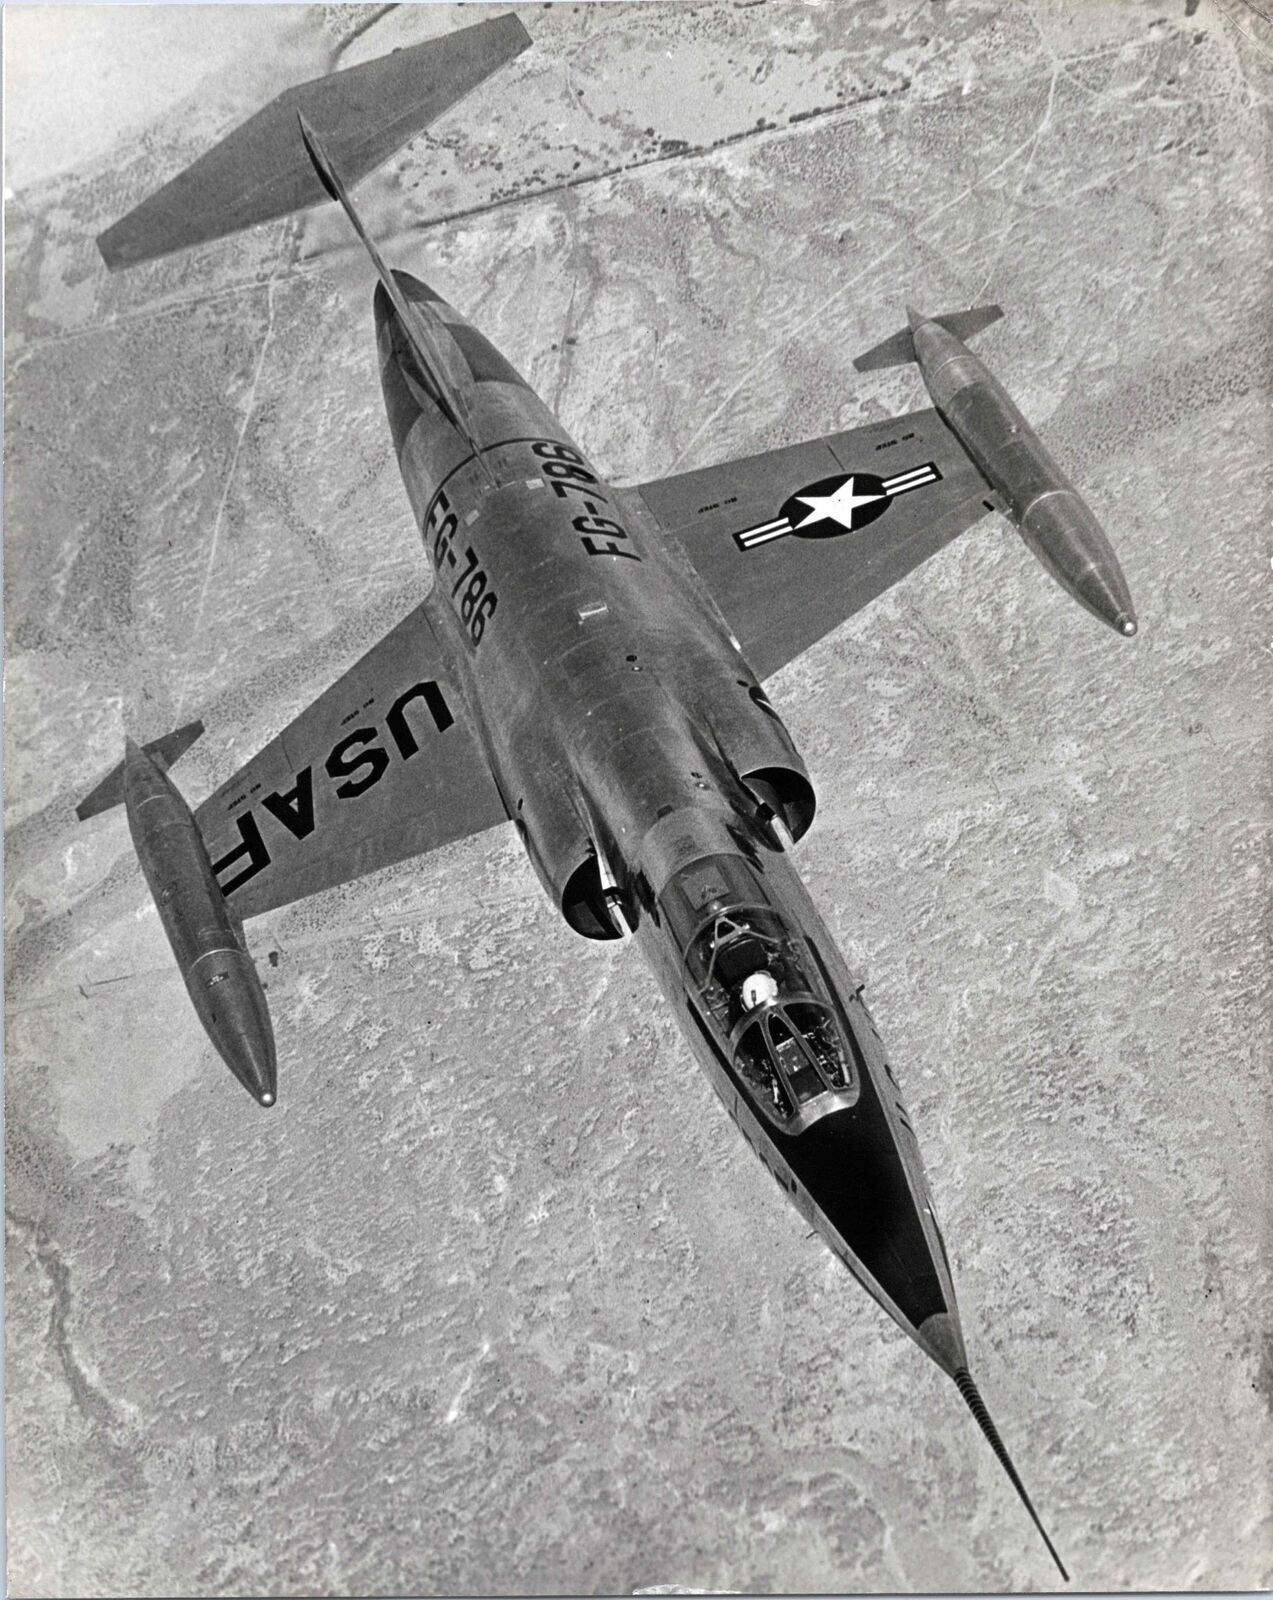 LOCKHEED F-104 STARFIGHTER FG-786 LARGE VINTAGE ORIGINAL MANUFACTURERS PHOTO